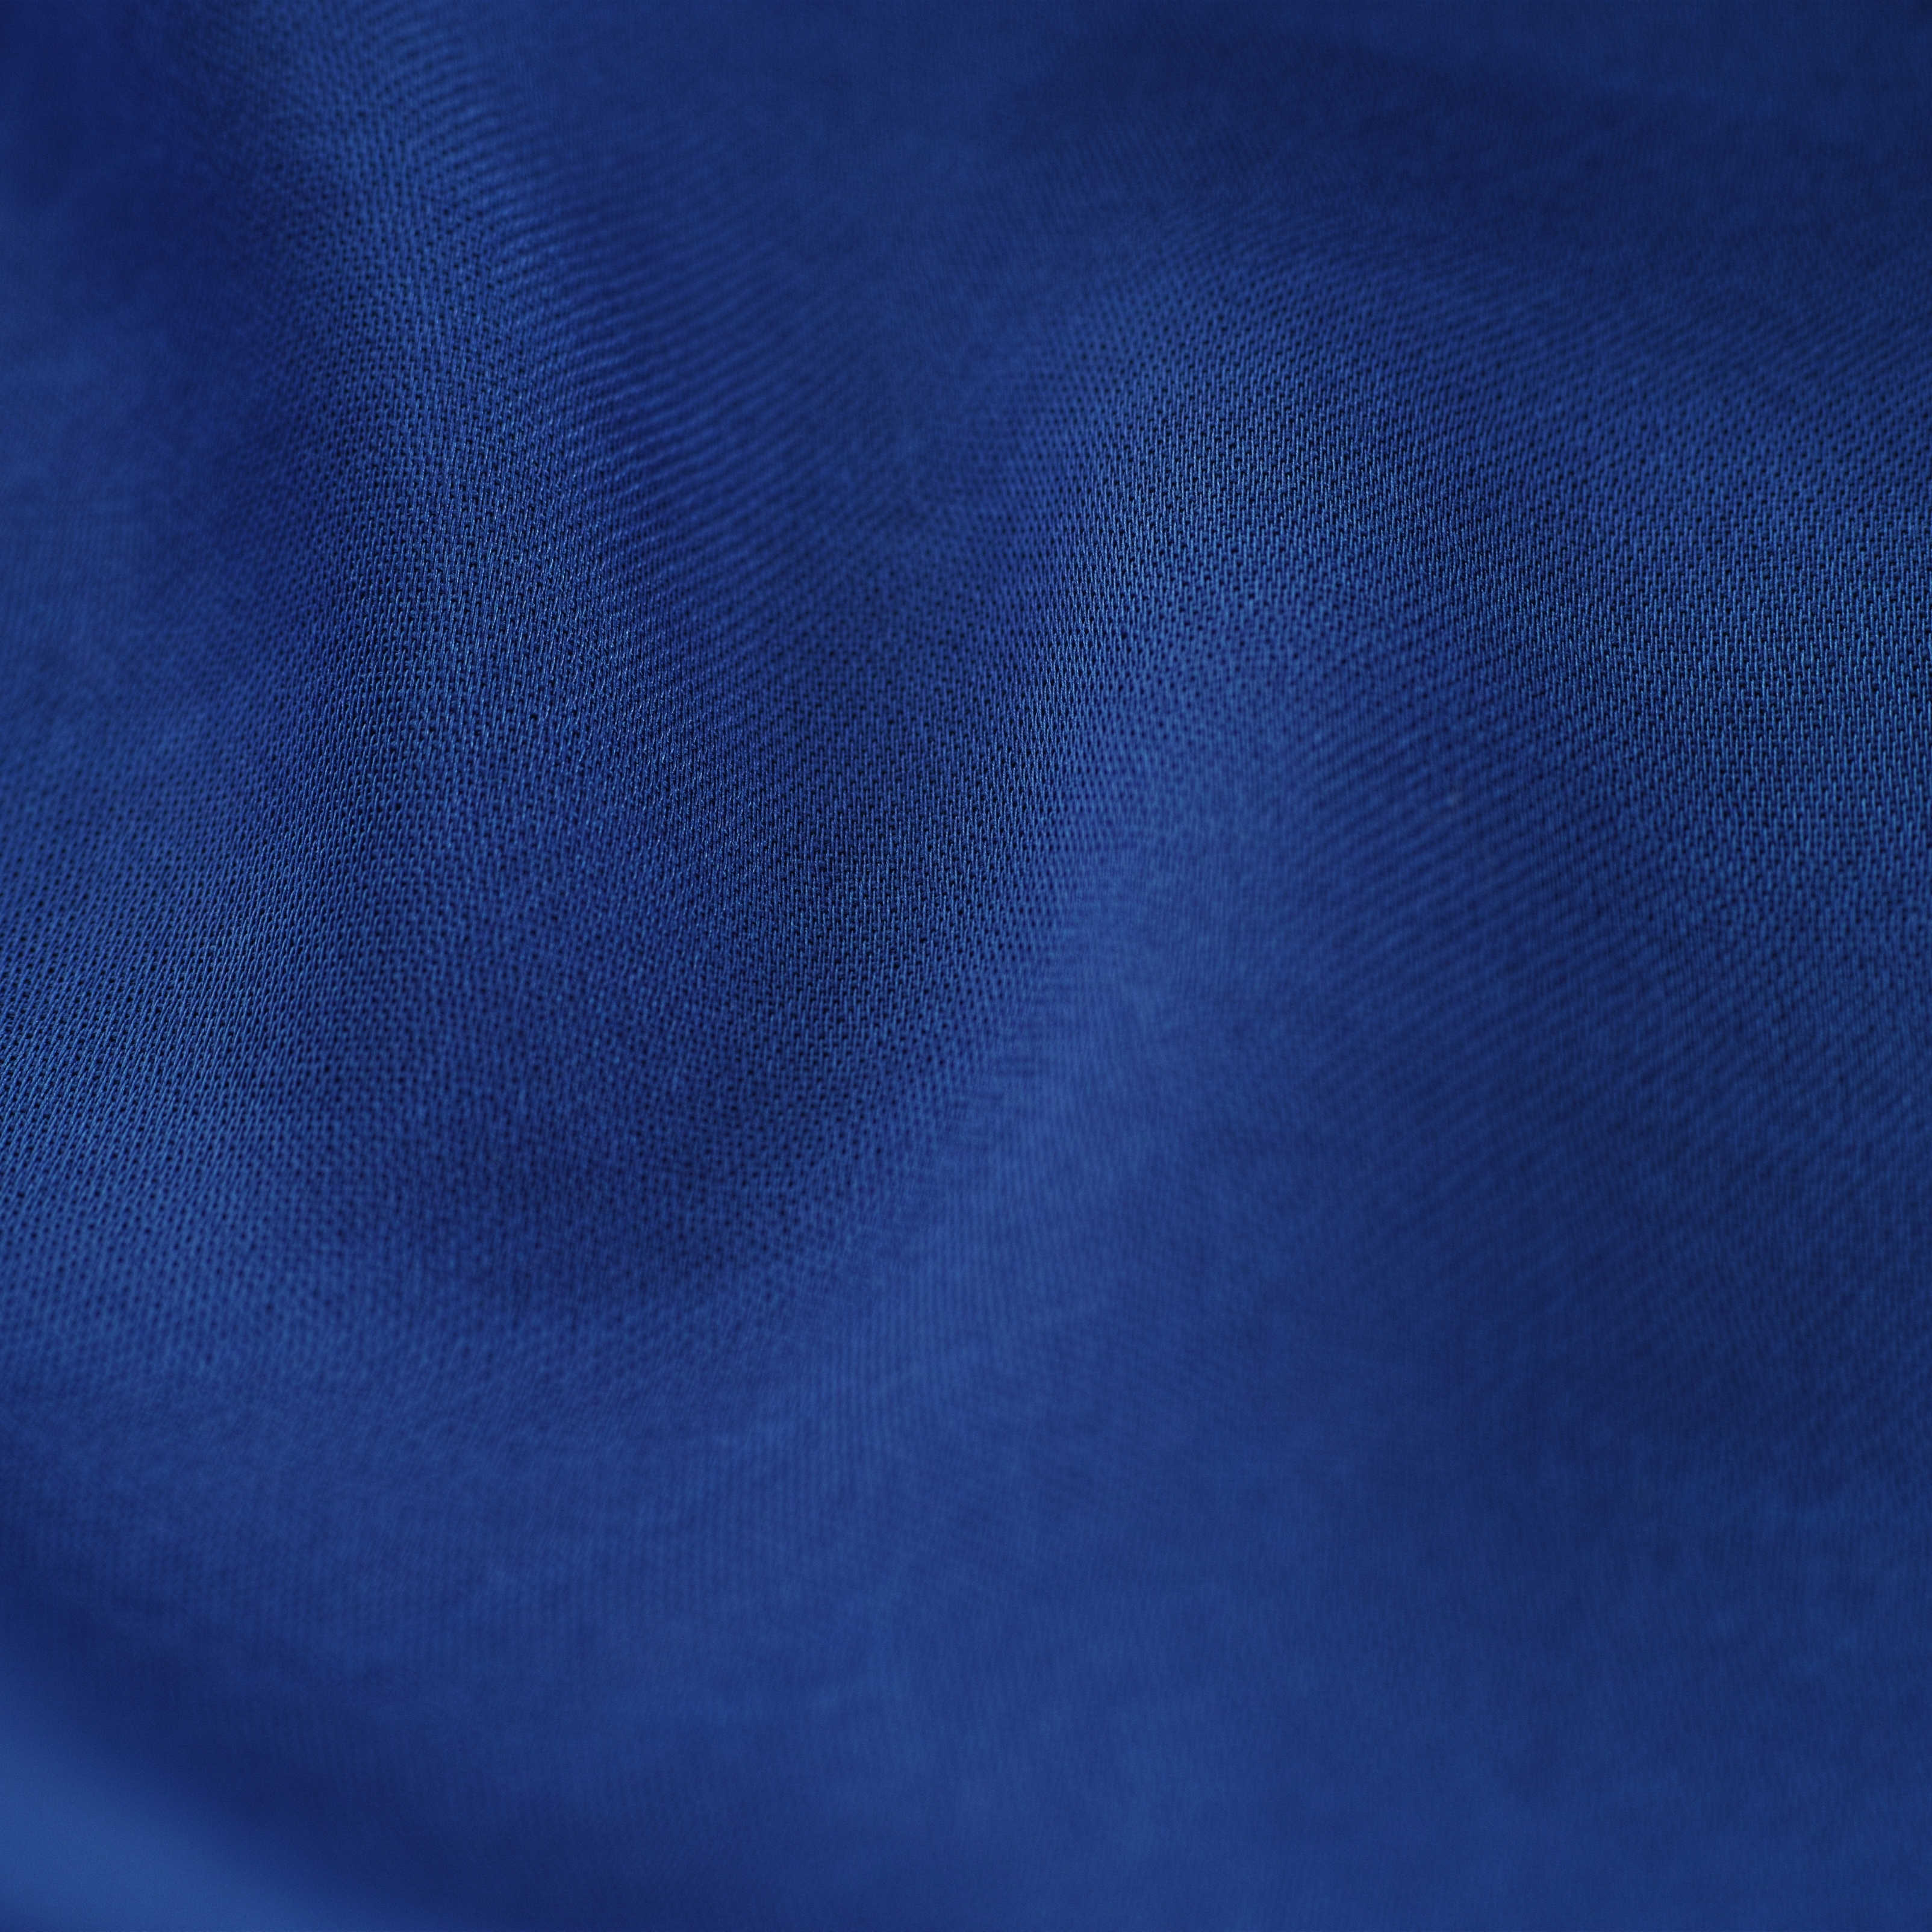 Blue Smooth Fabric Texture iPad Wallpaper